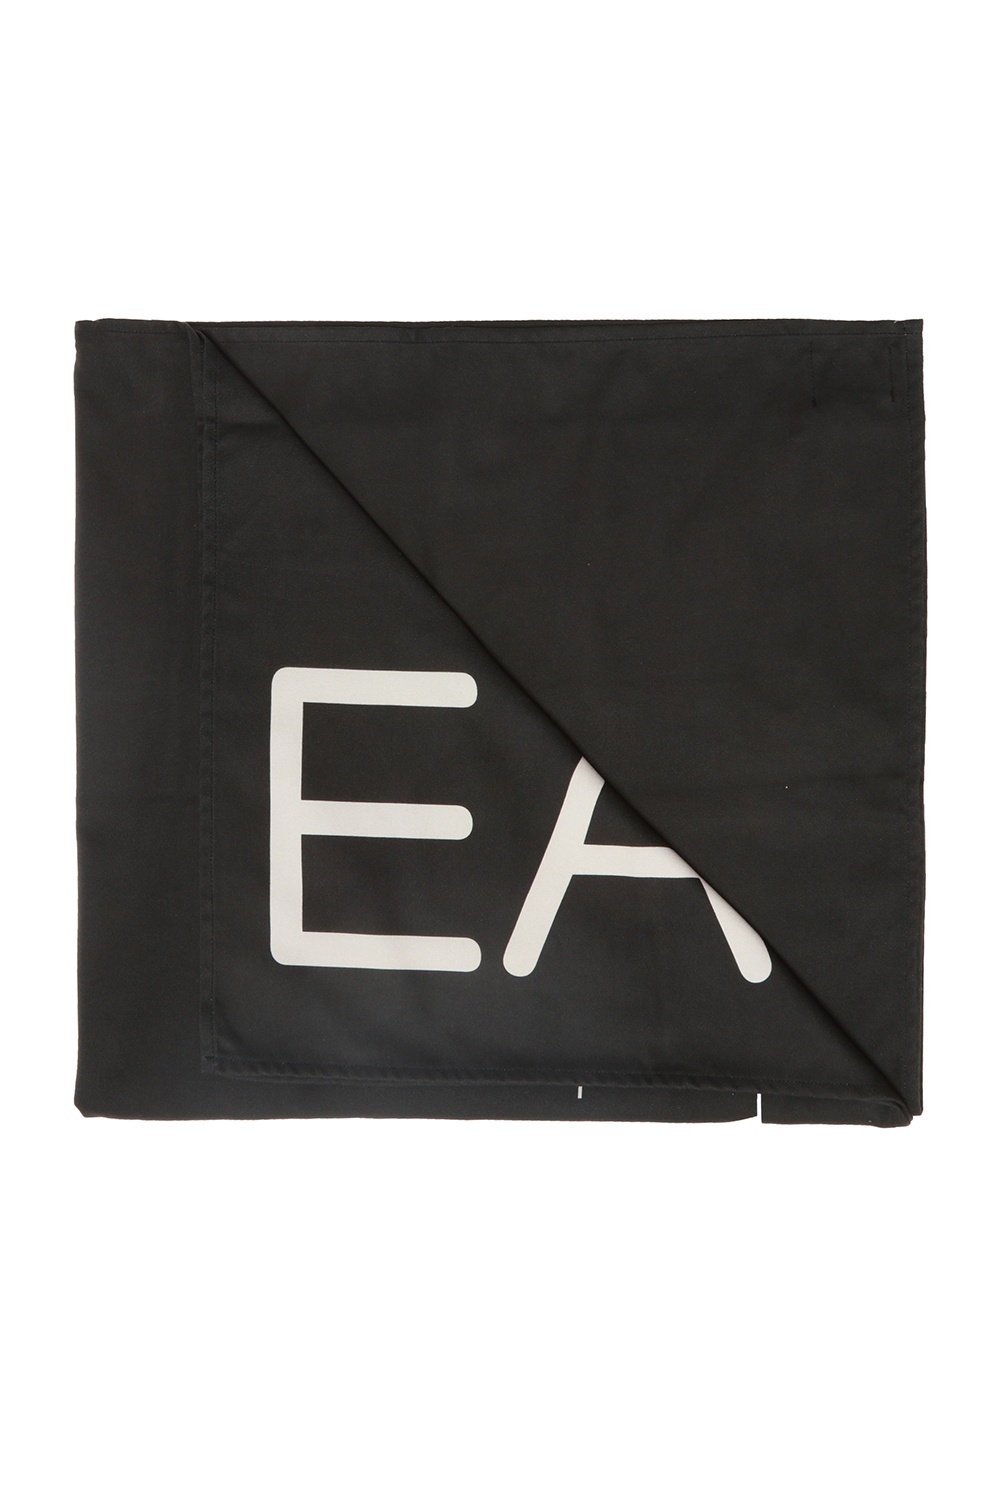 EA7 Emporio Stiefeletten armani Logo towel